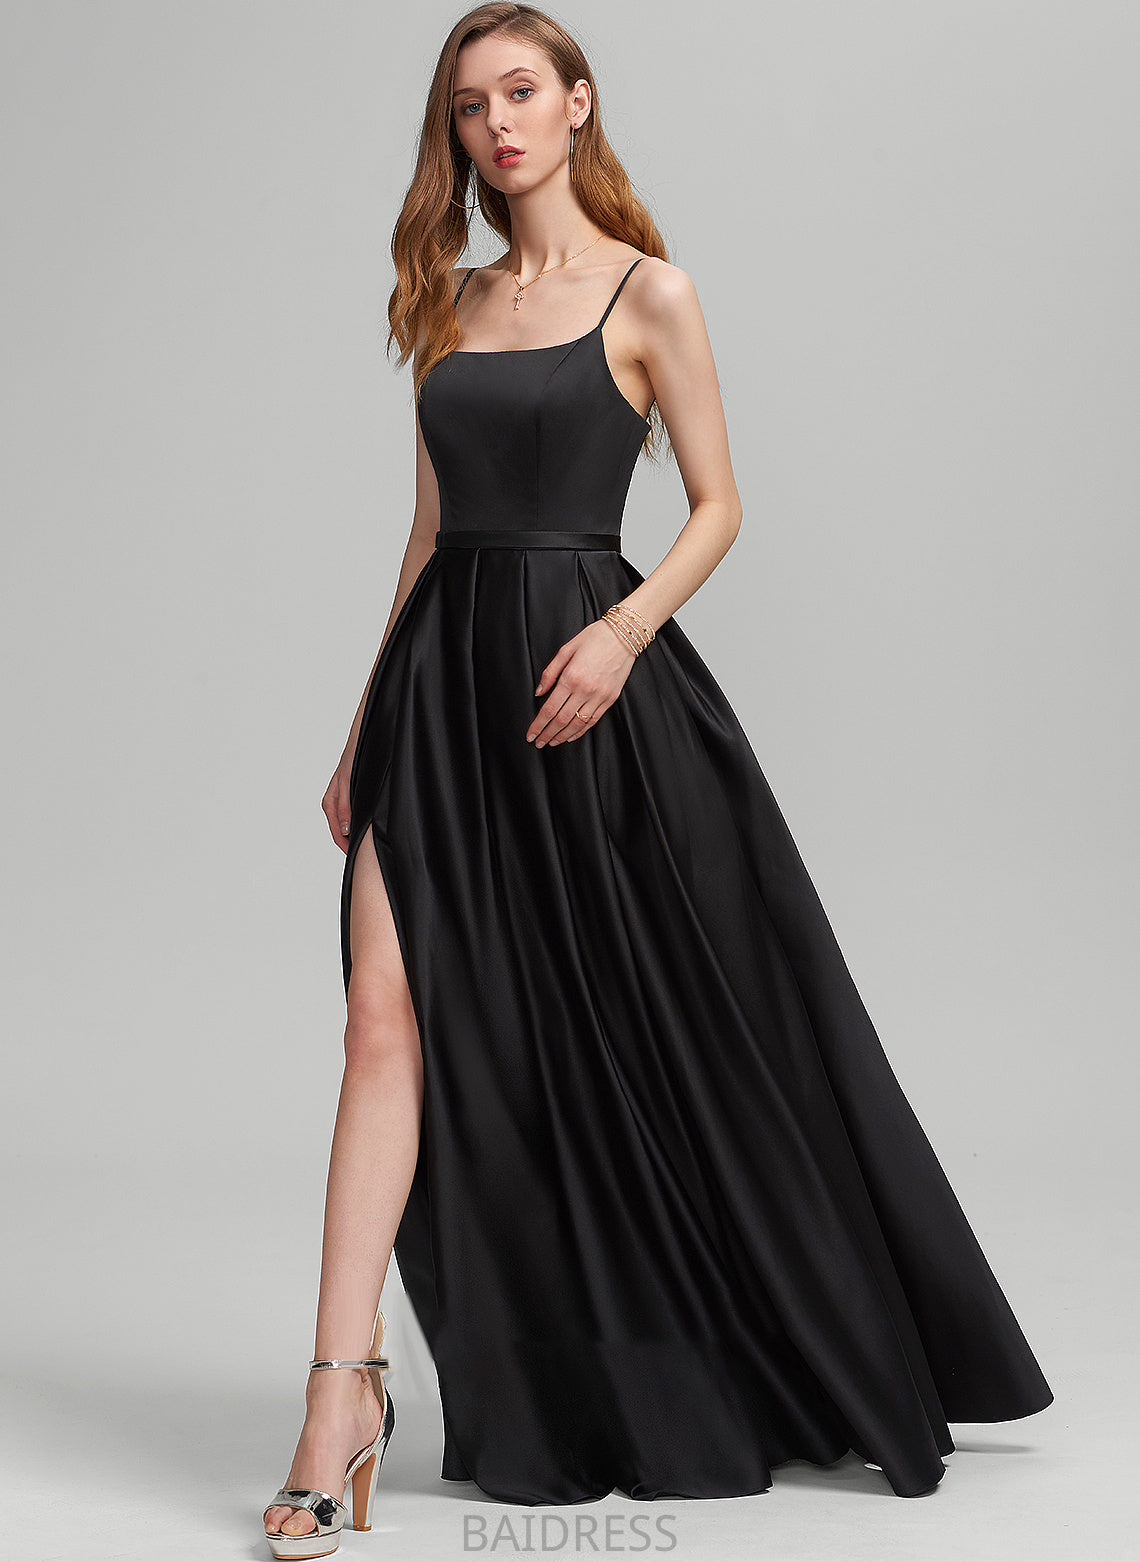 With Lilah Square Neckline Front Pockets A-Line Floor-Length Split Prom Dresses Satin